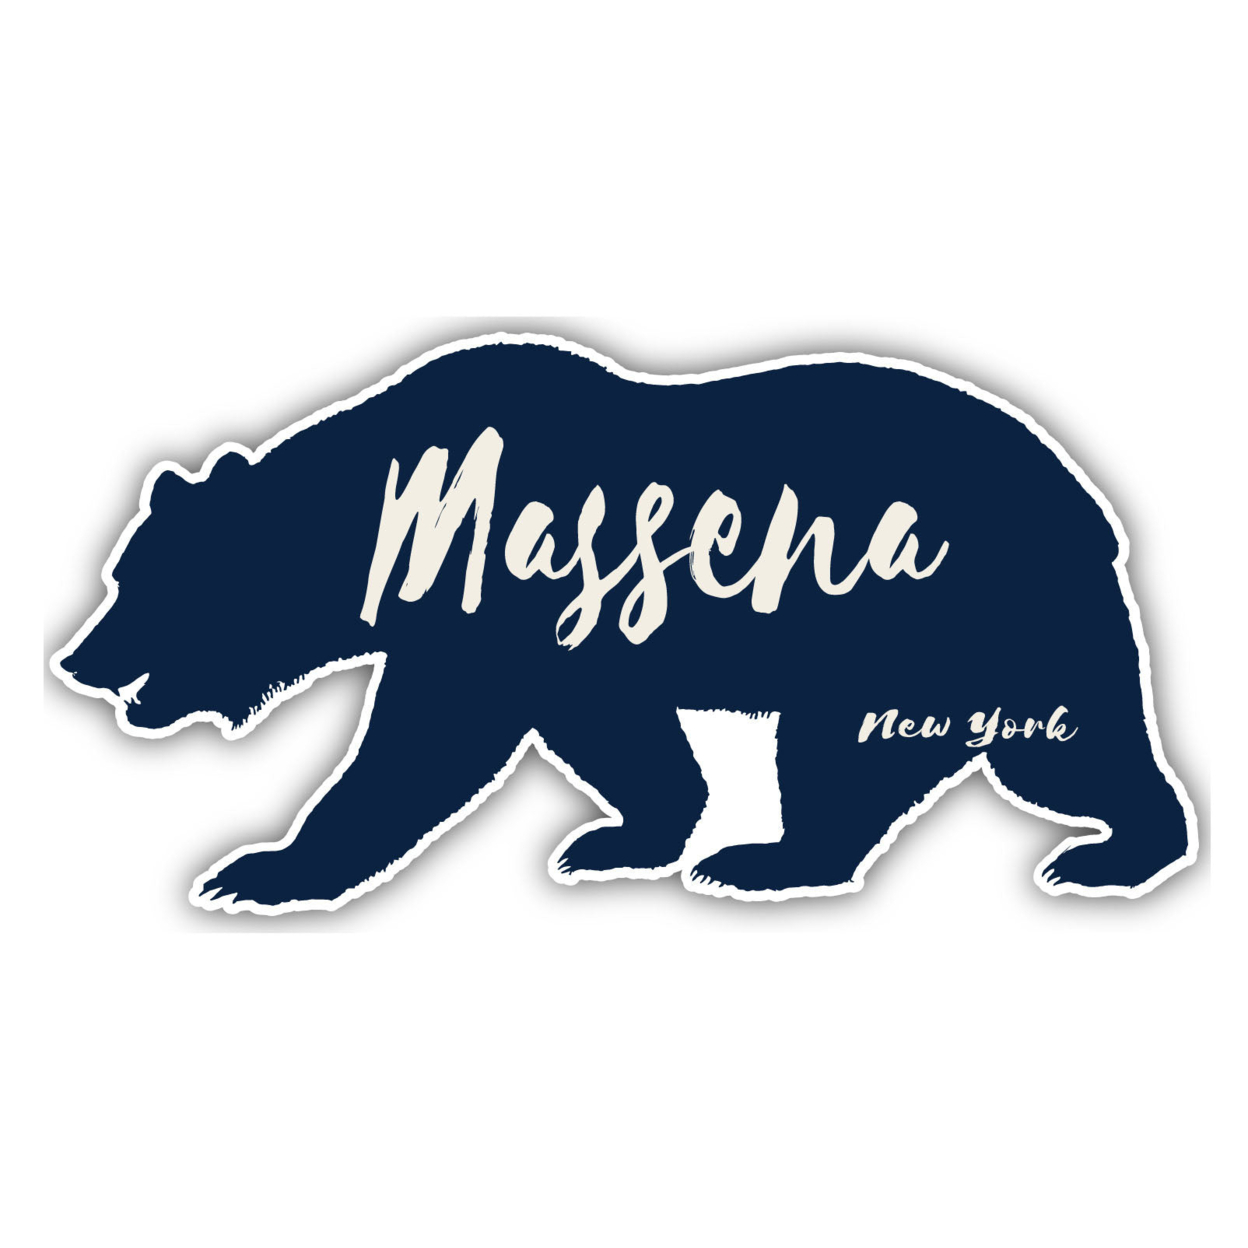 Massena New York Souvenir Decorative Stickers (Choose Theme And Size) - 4-Inch, Bear